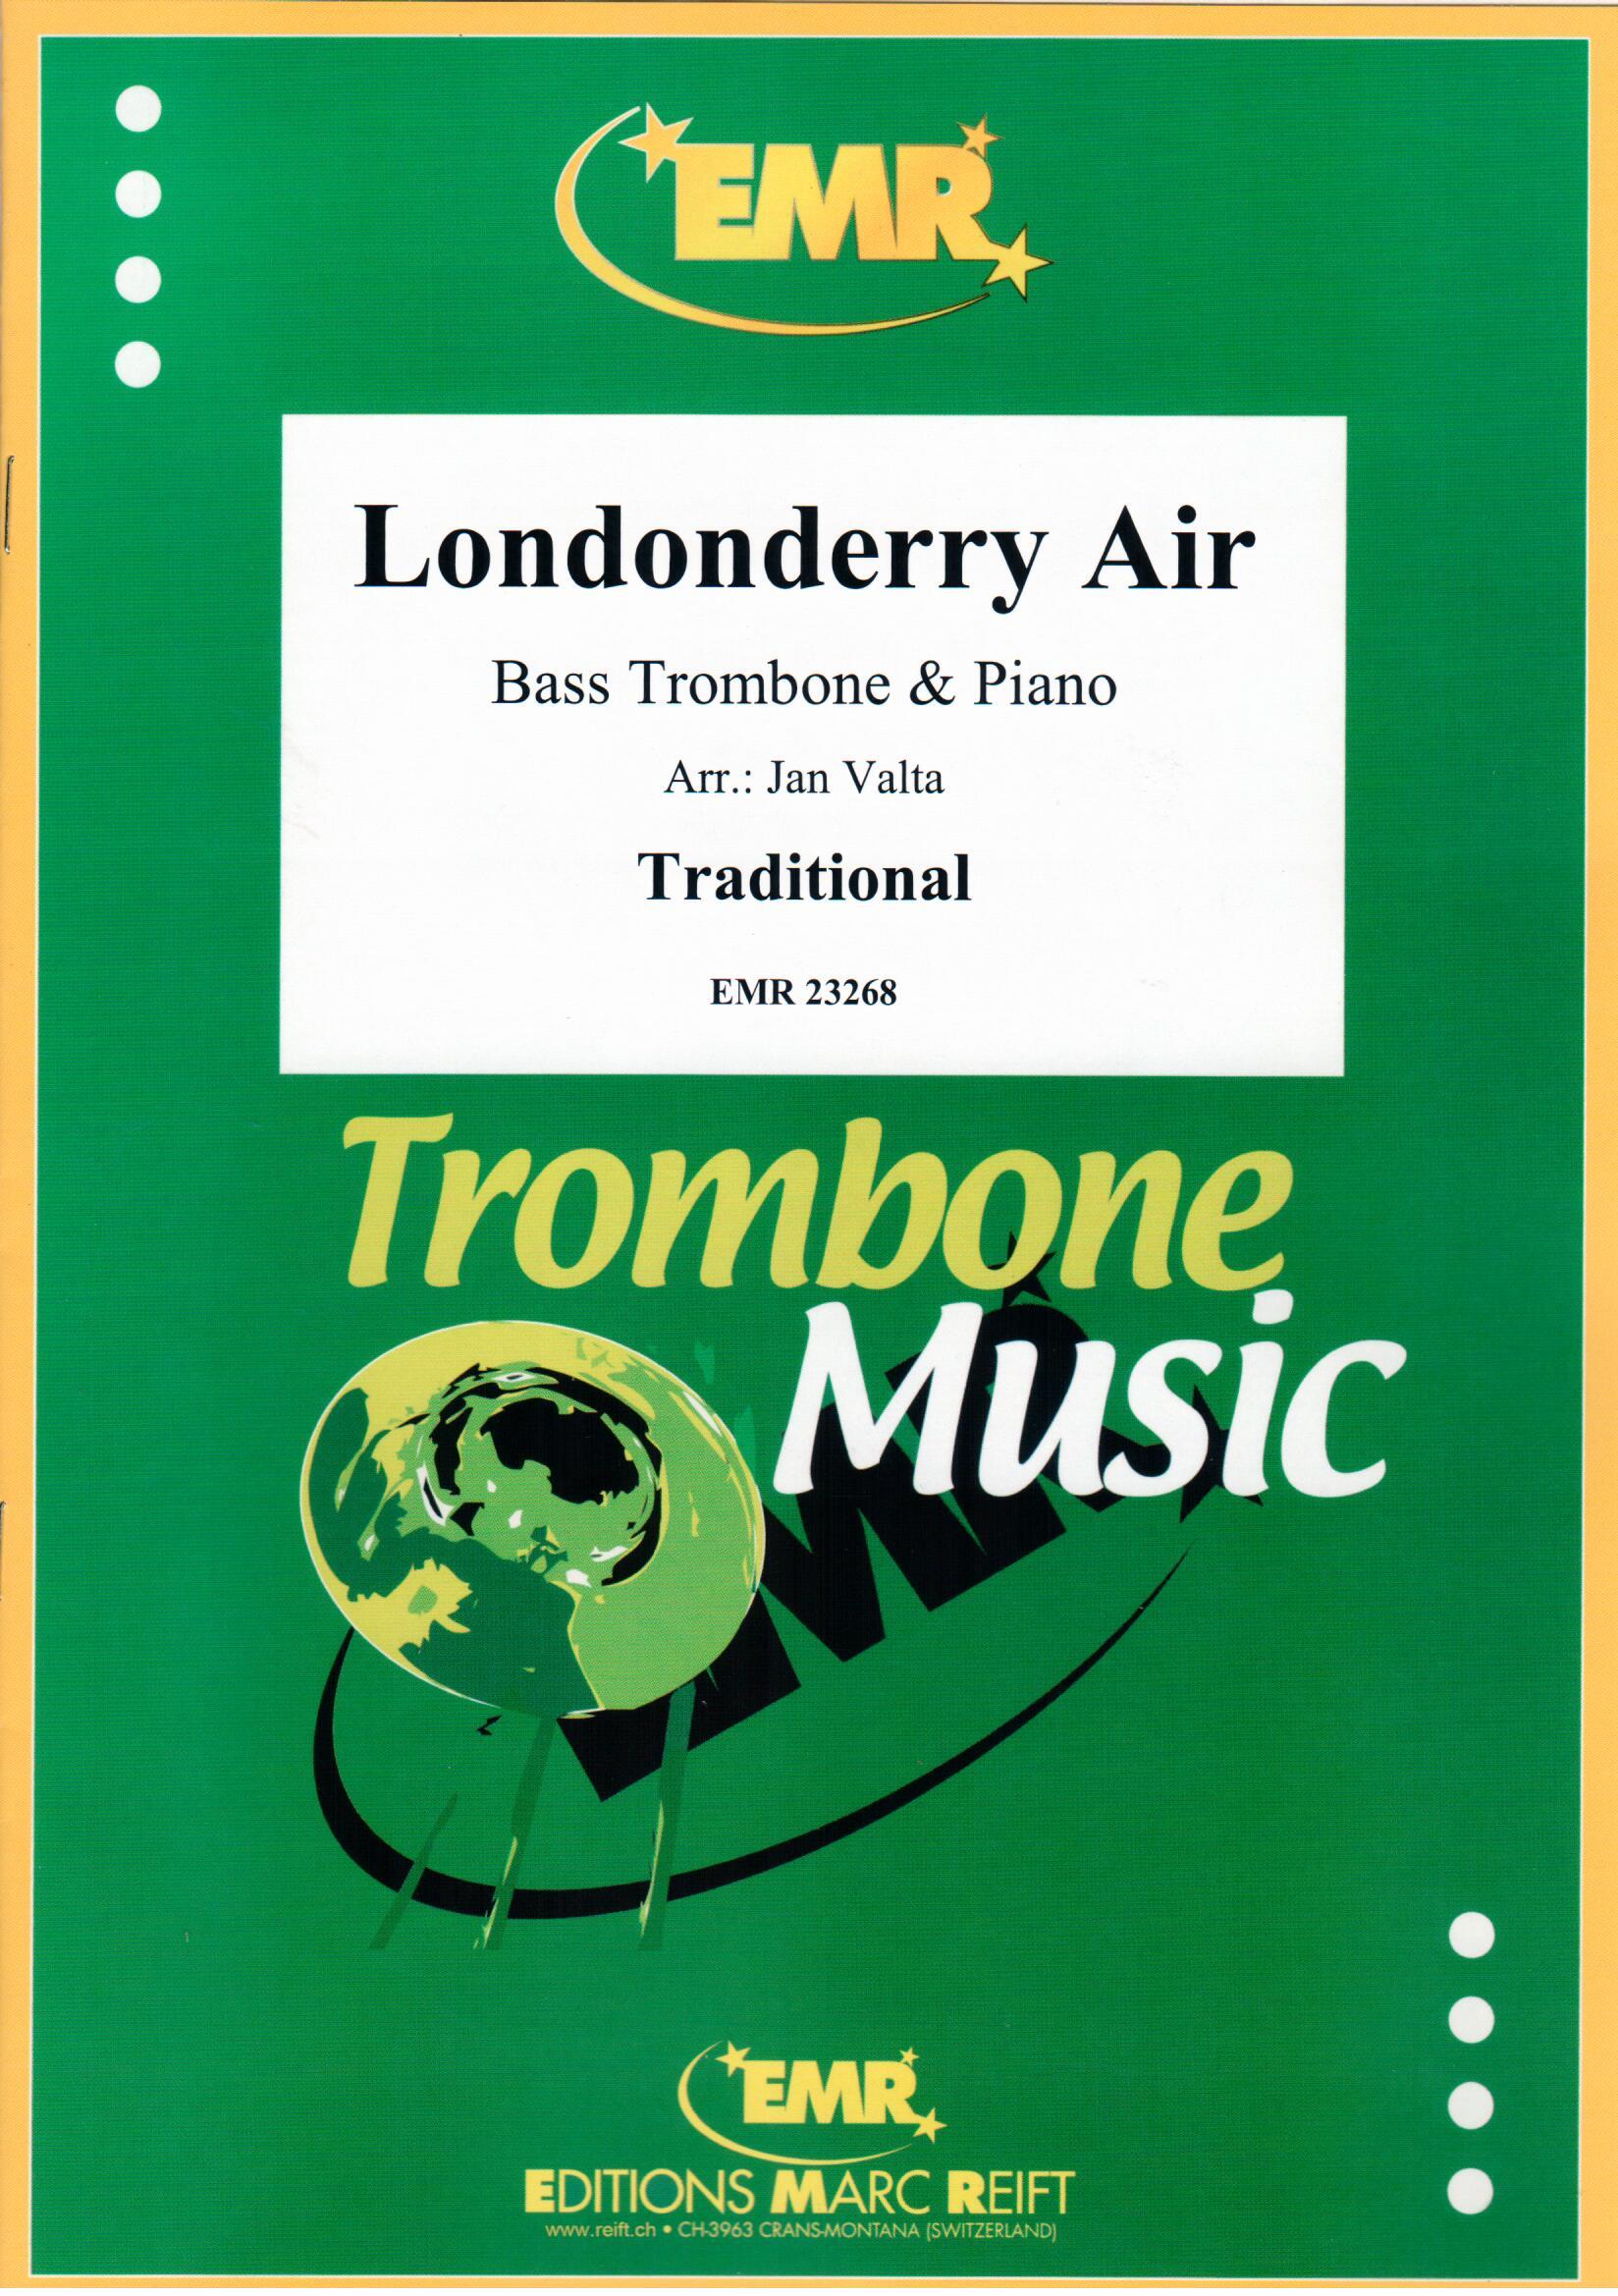 LONDONDERRY AIR, EMR Bass Trombone